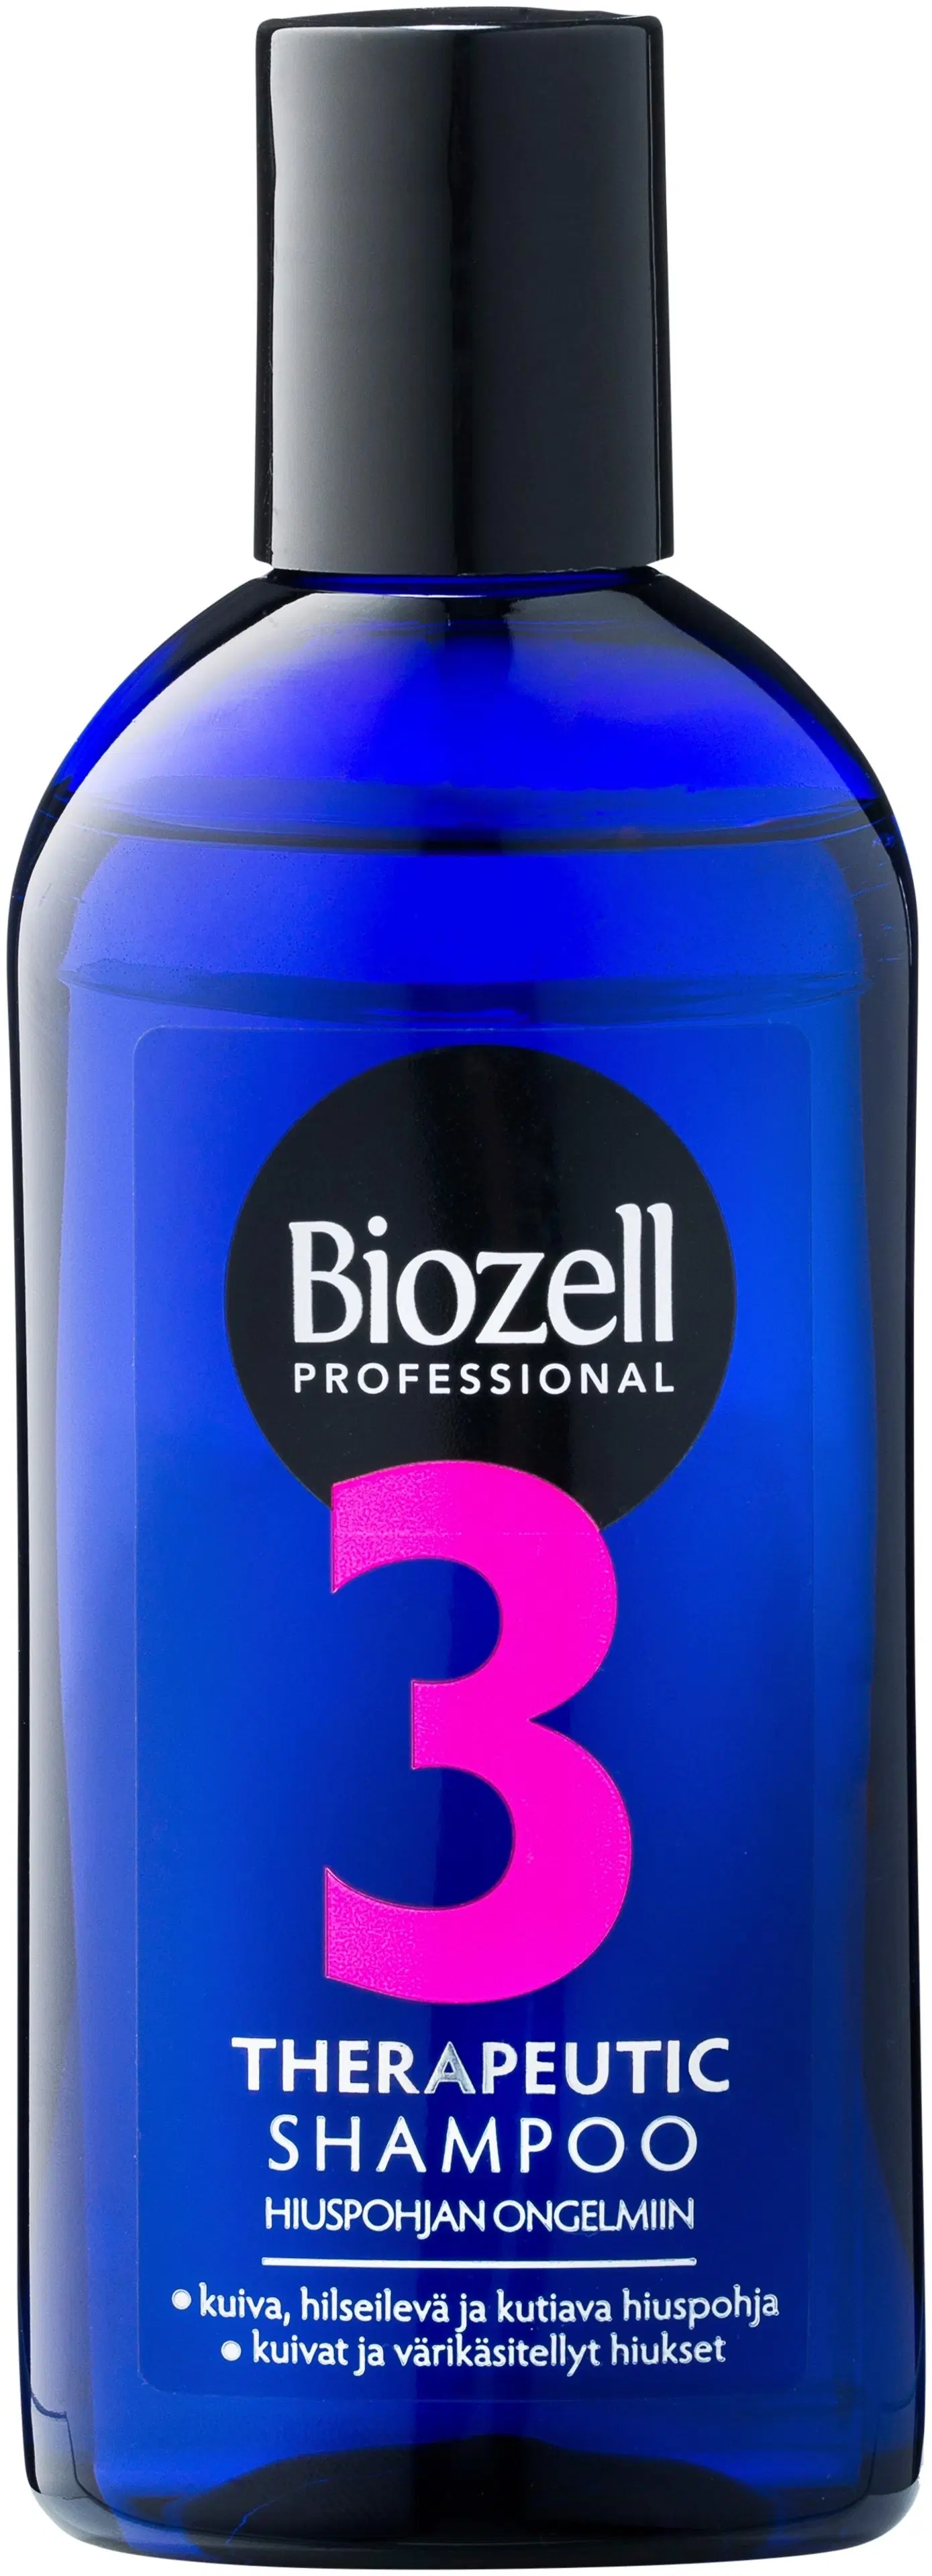 Biozell Professional Therapeutic 3 Shampoo kuivat/kutiava hiuspohja 200ml